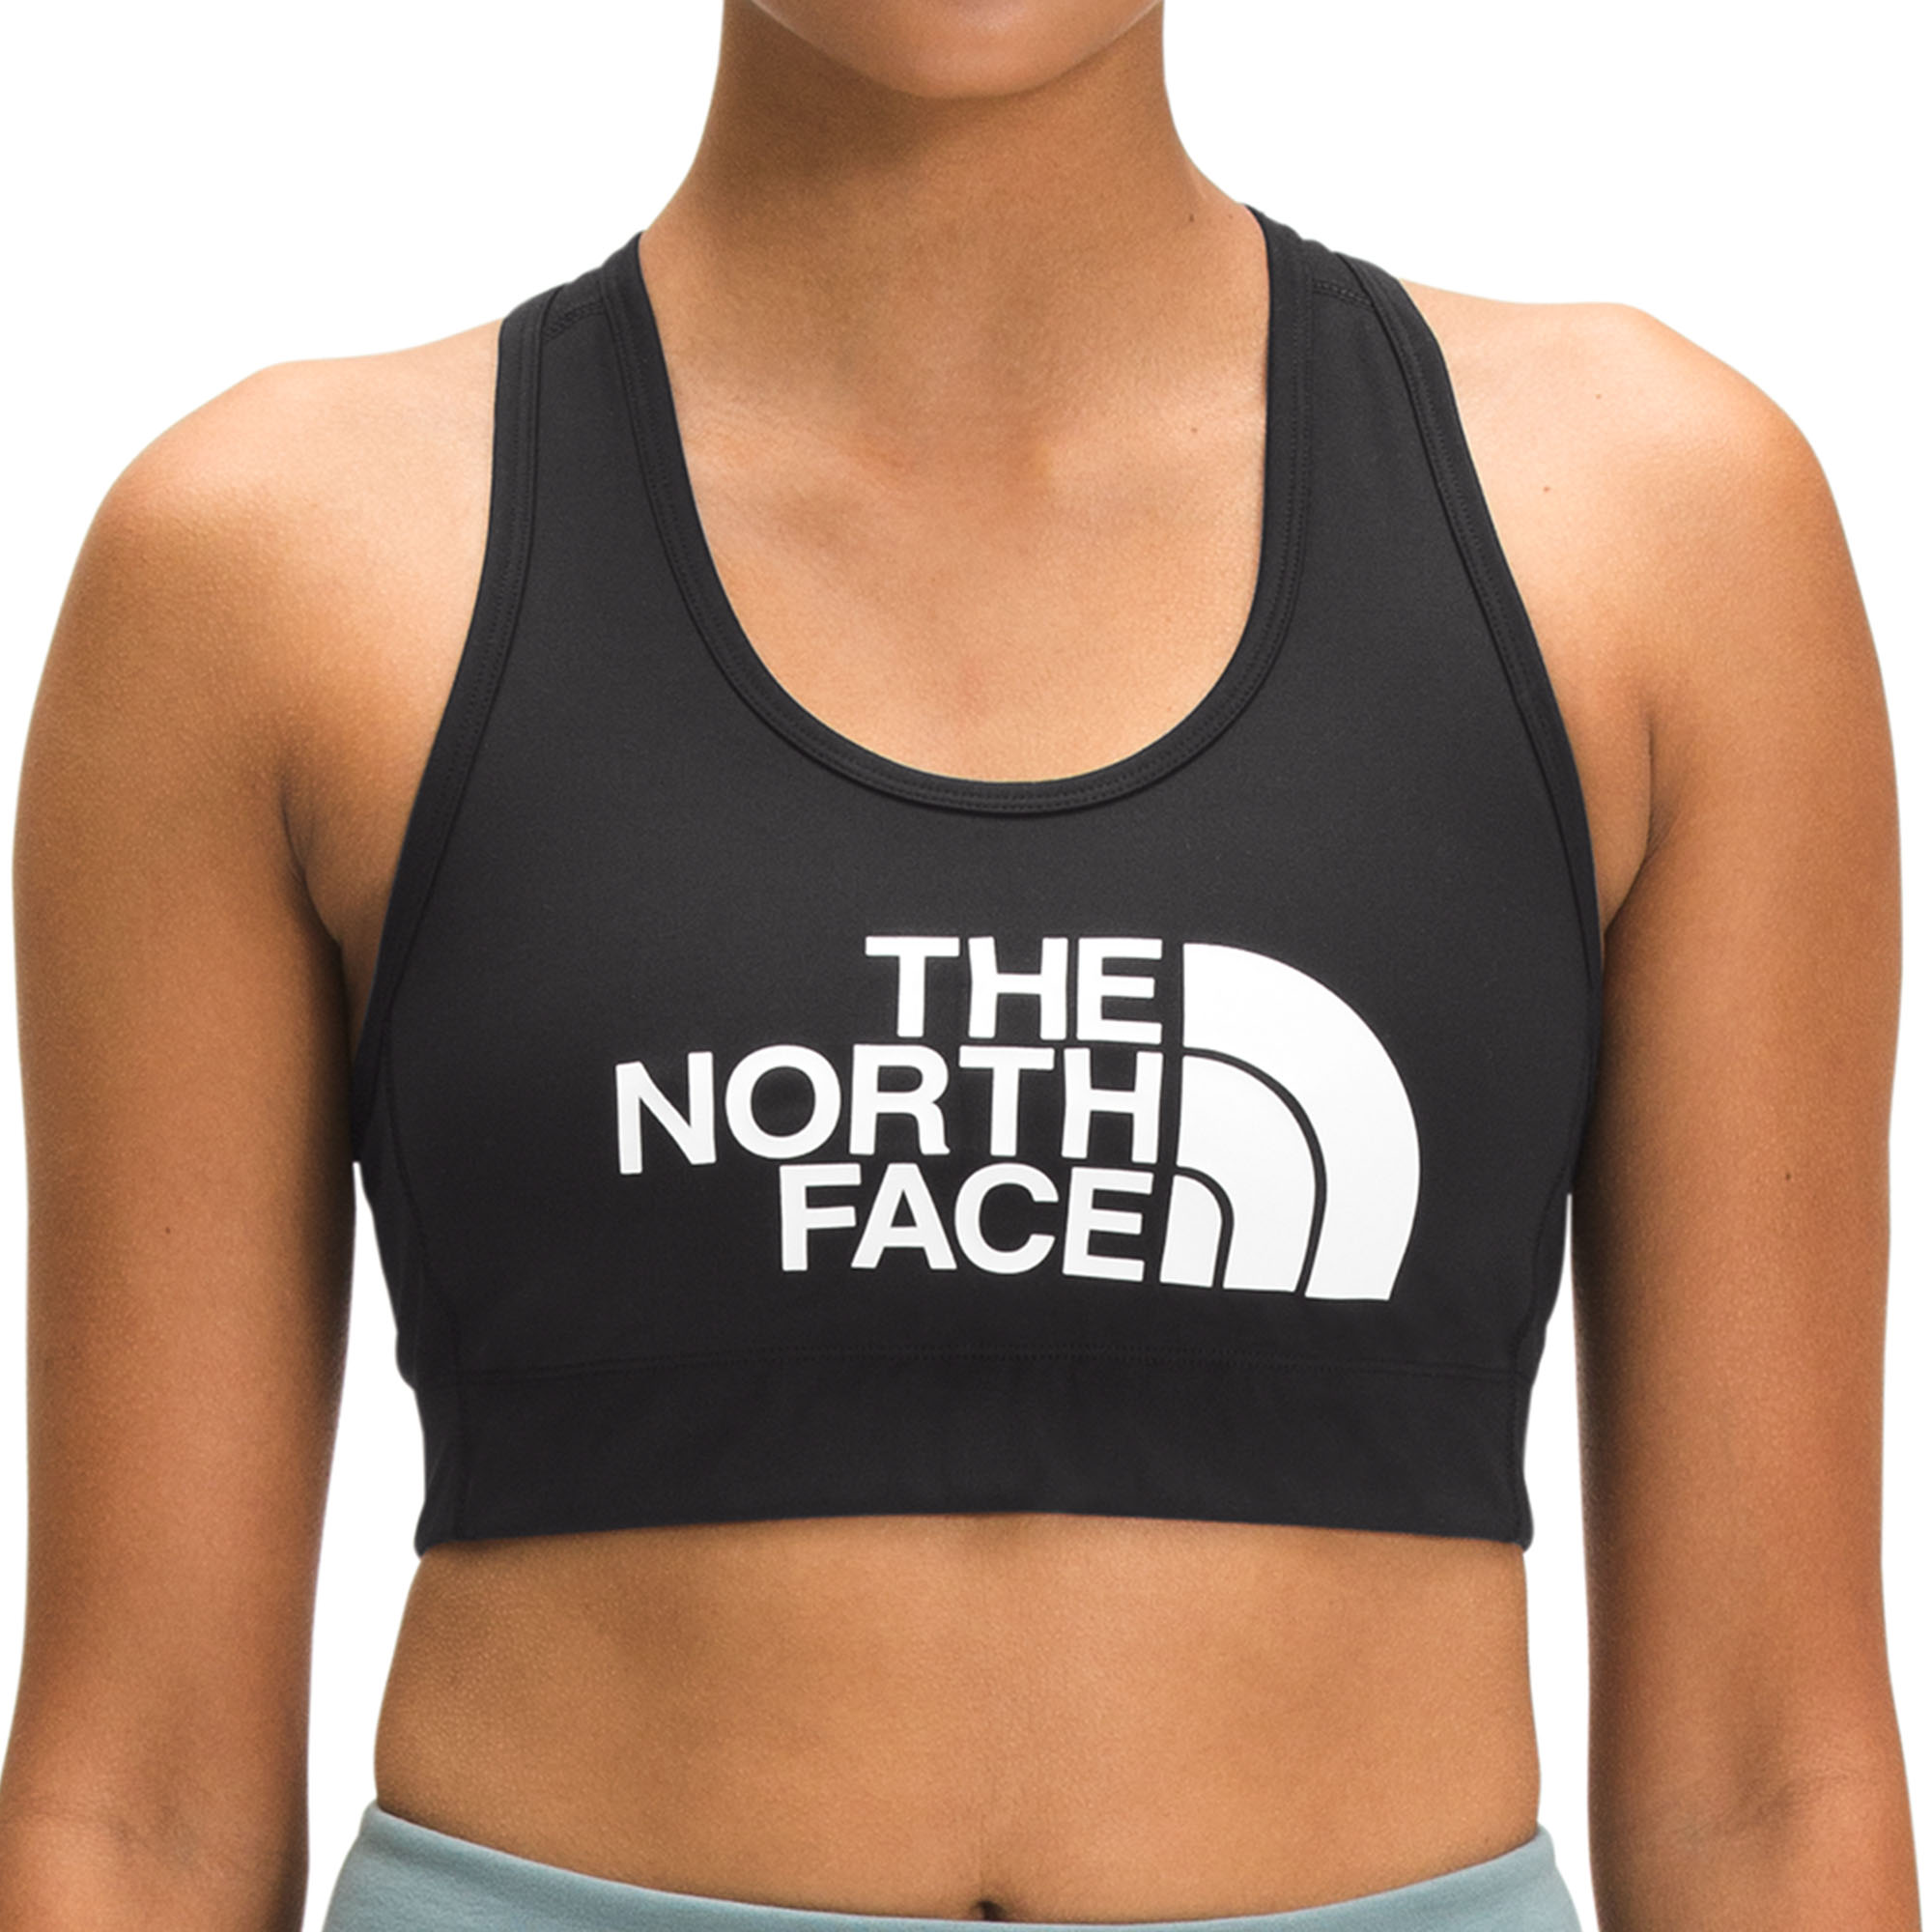 The North Face Midline Bra - Women's